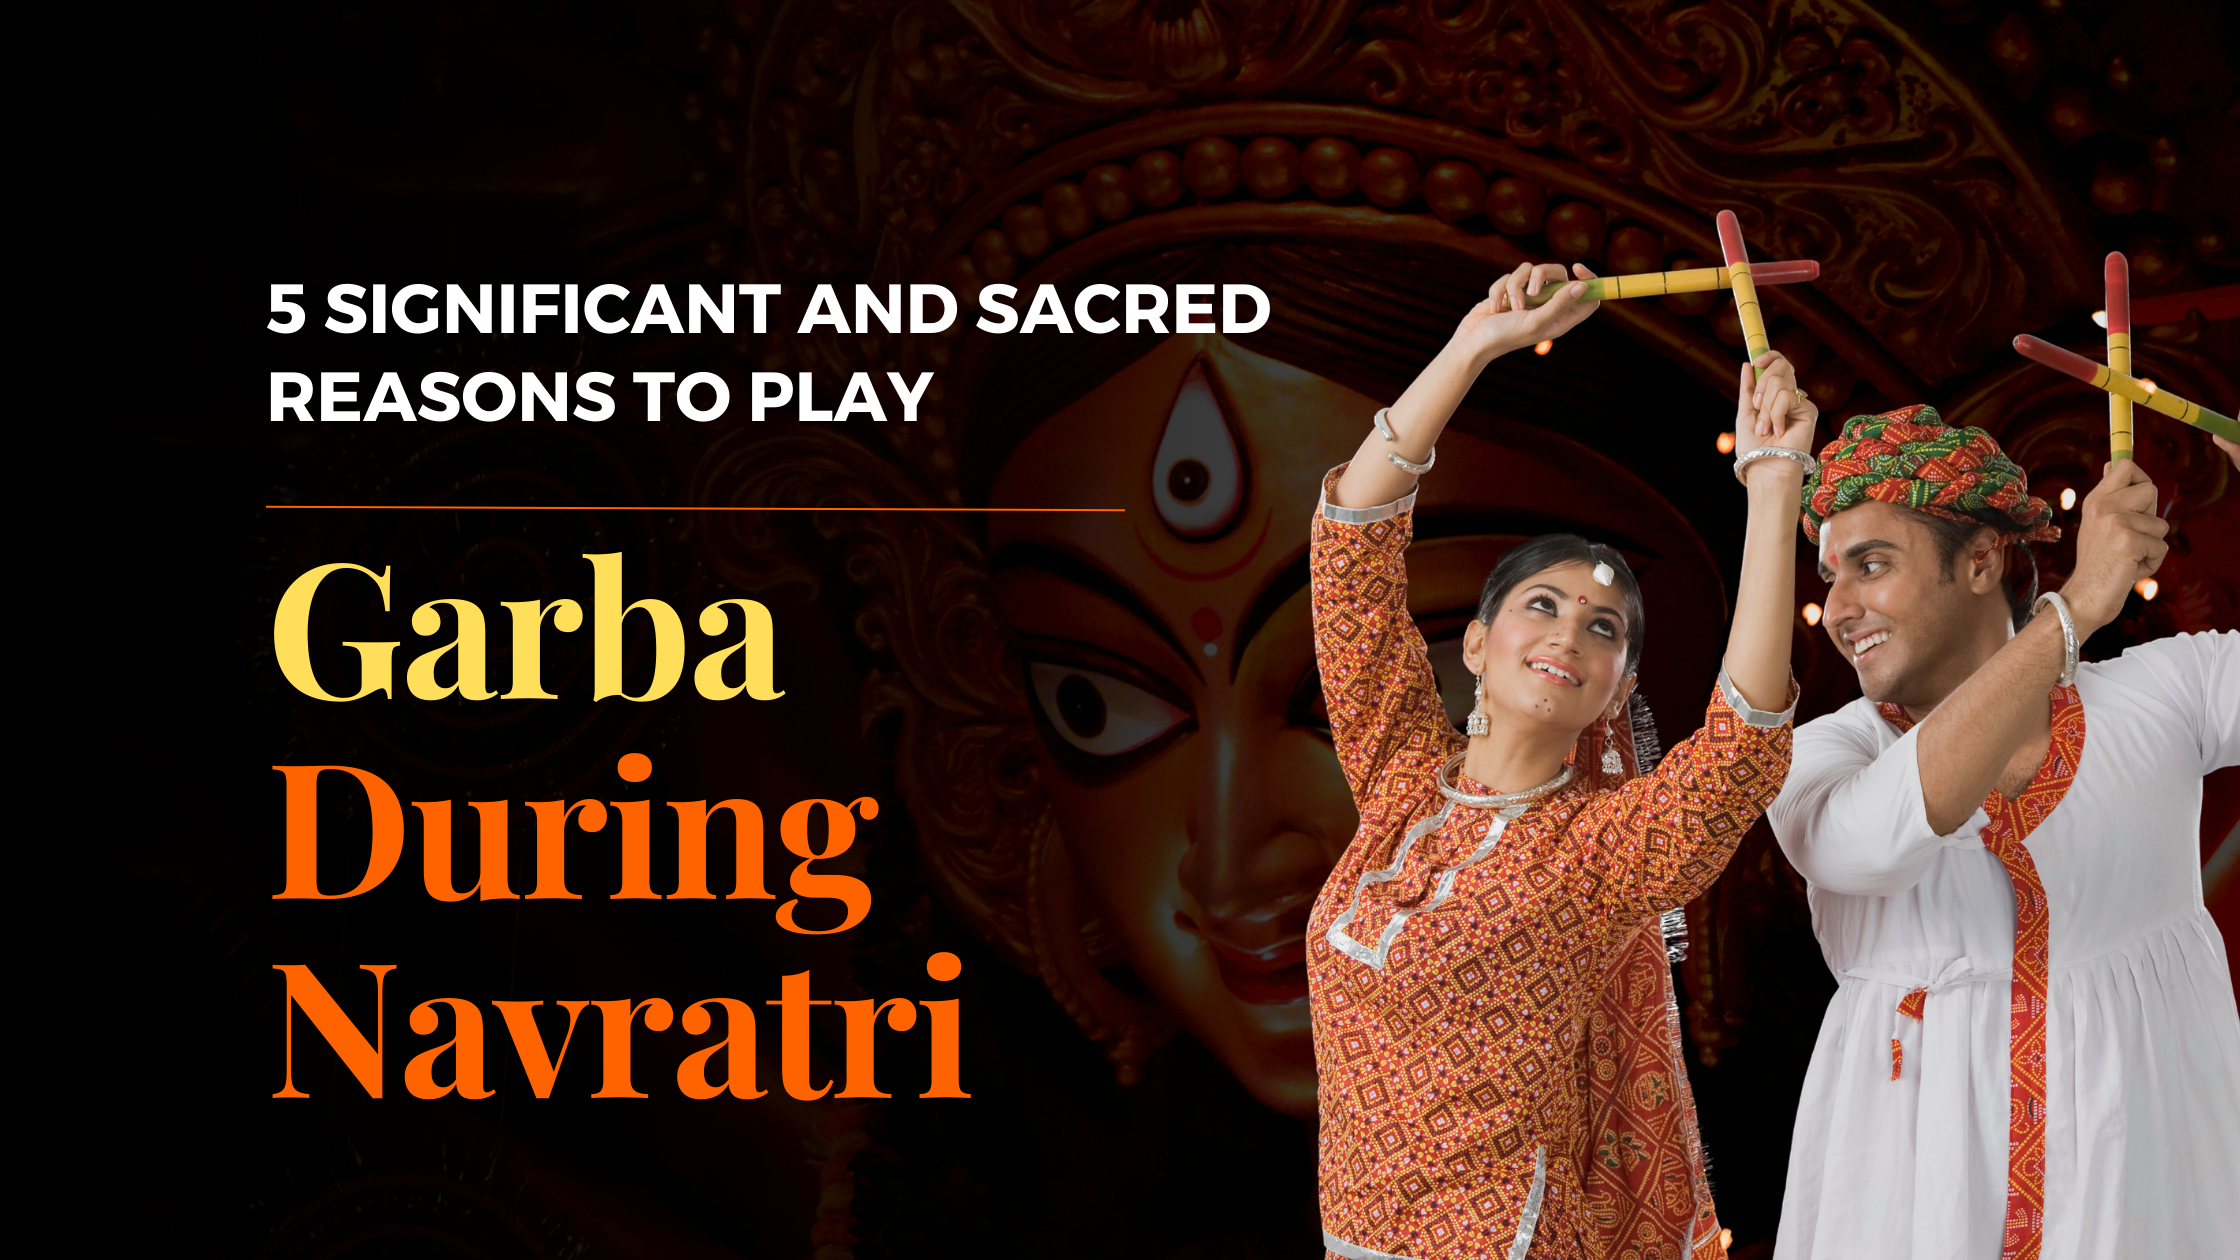 5 Significant and Sacred reasons to play Garba During Navratri